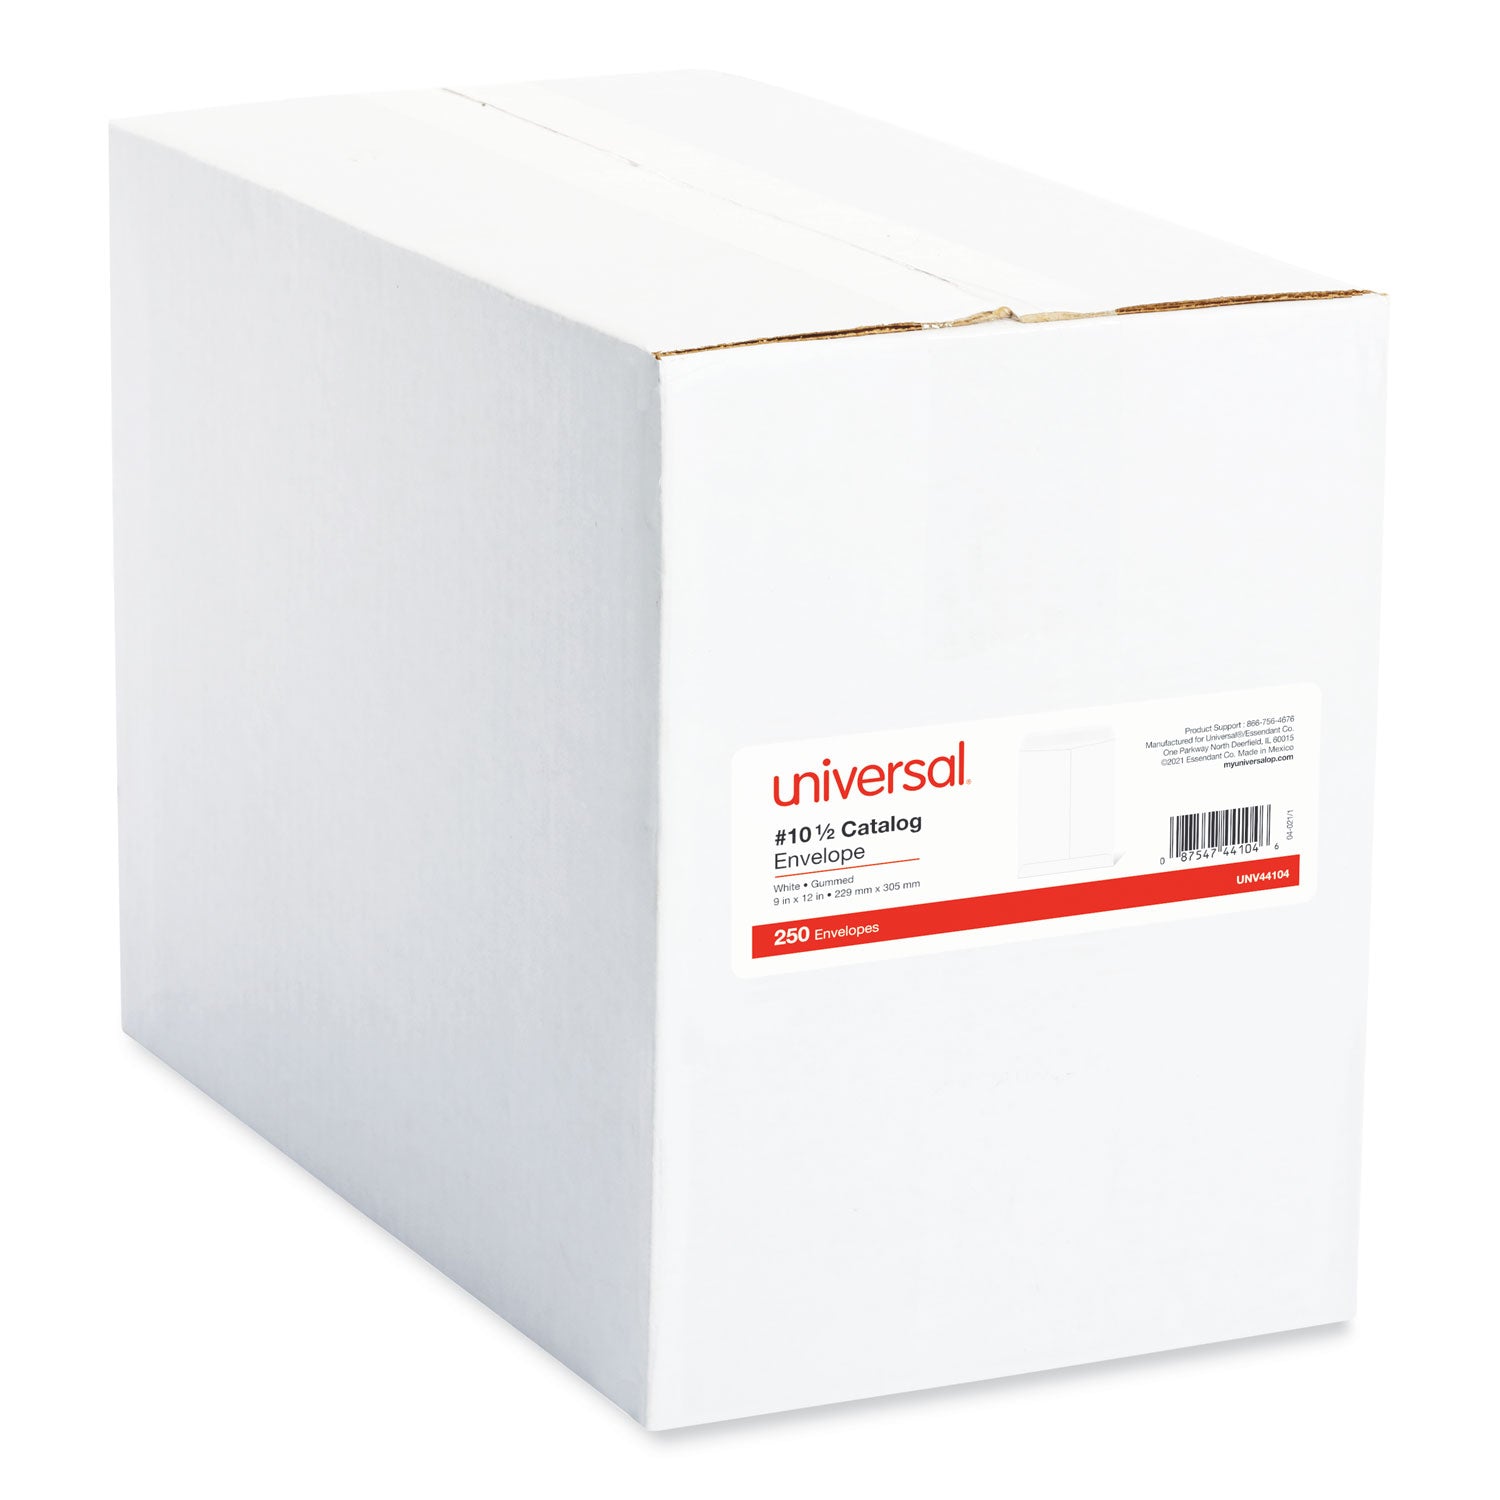 Catalog Envelope, 24 lb Bond Weight Paper, #10 1/2, Square Flap, Gummed Closure, 9 x 12, White, 250/Box - 